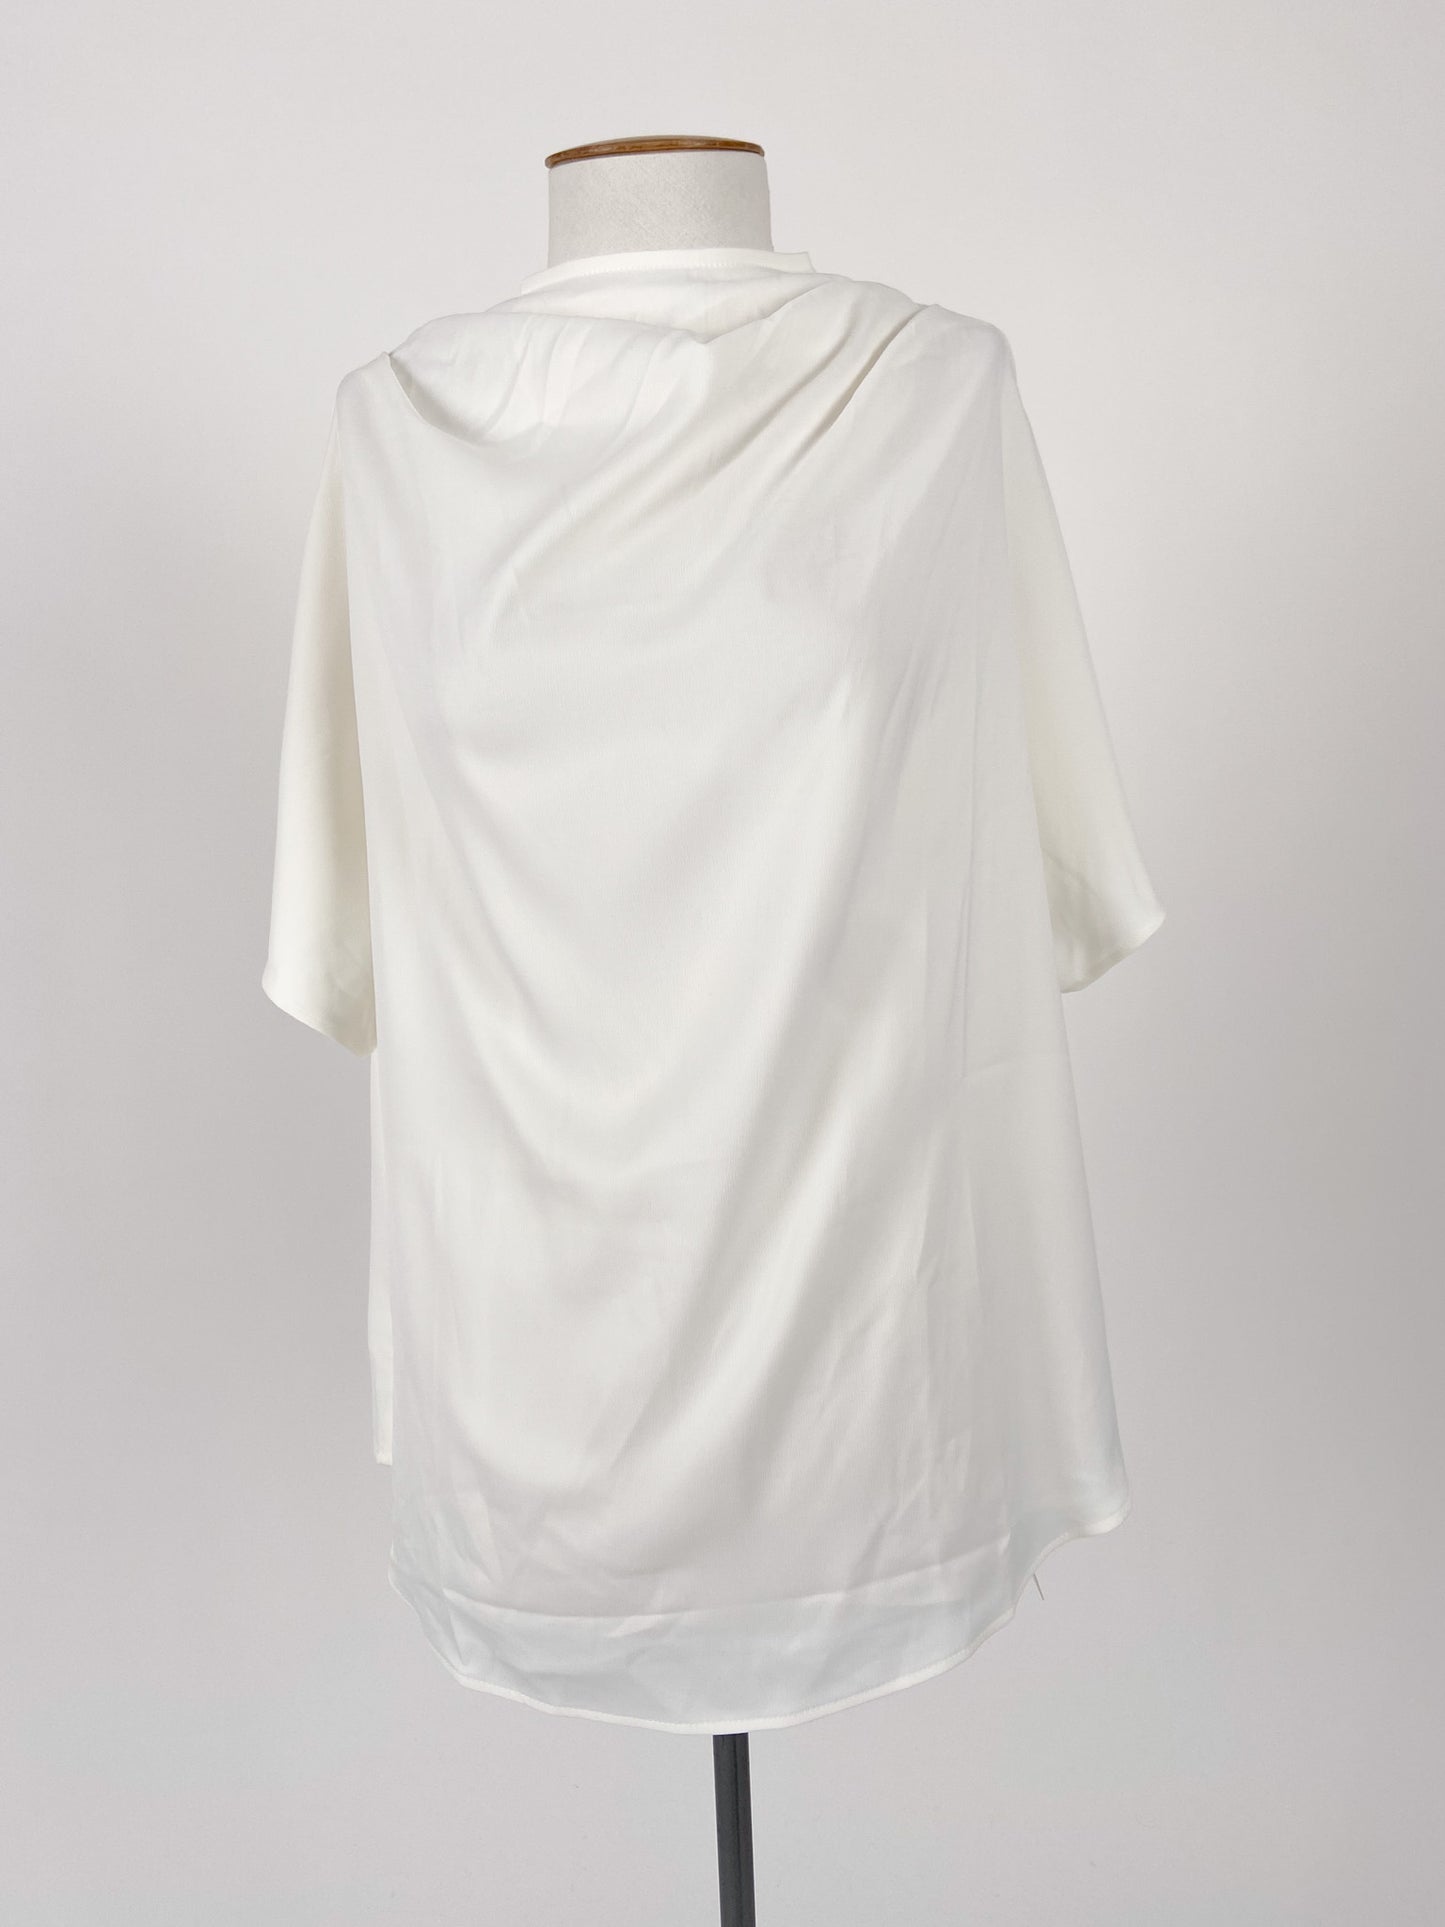 Shein | White Casual/Workwear Top | Size XS